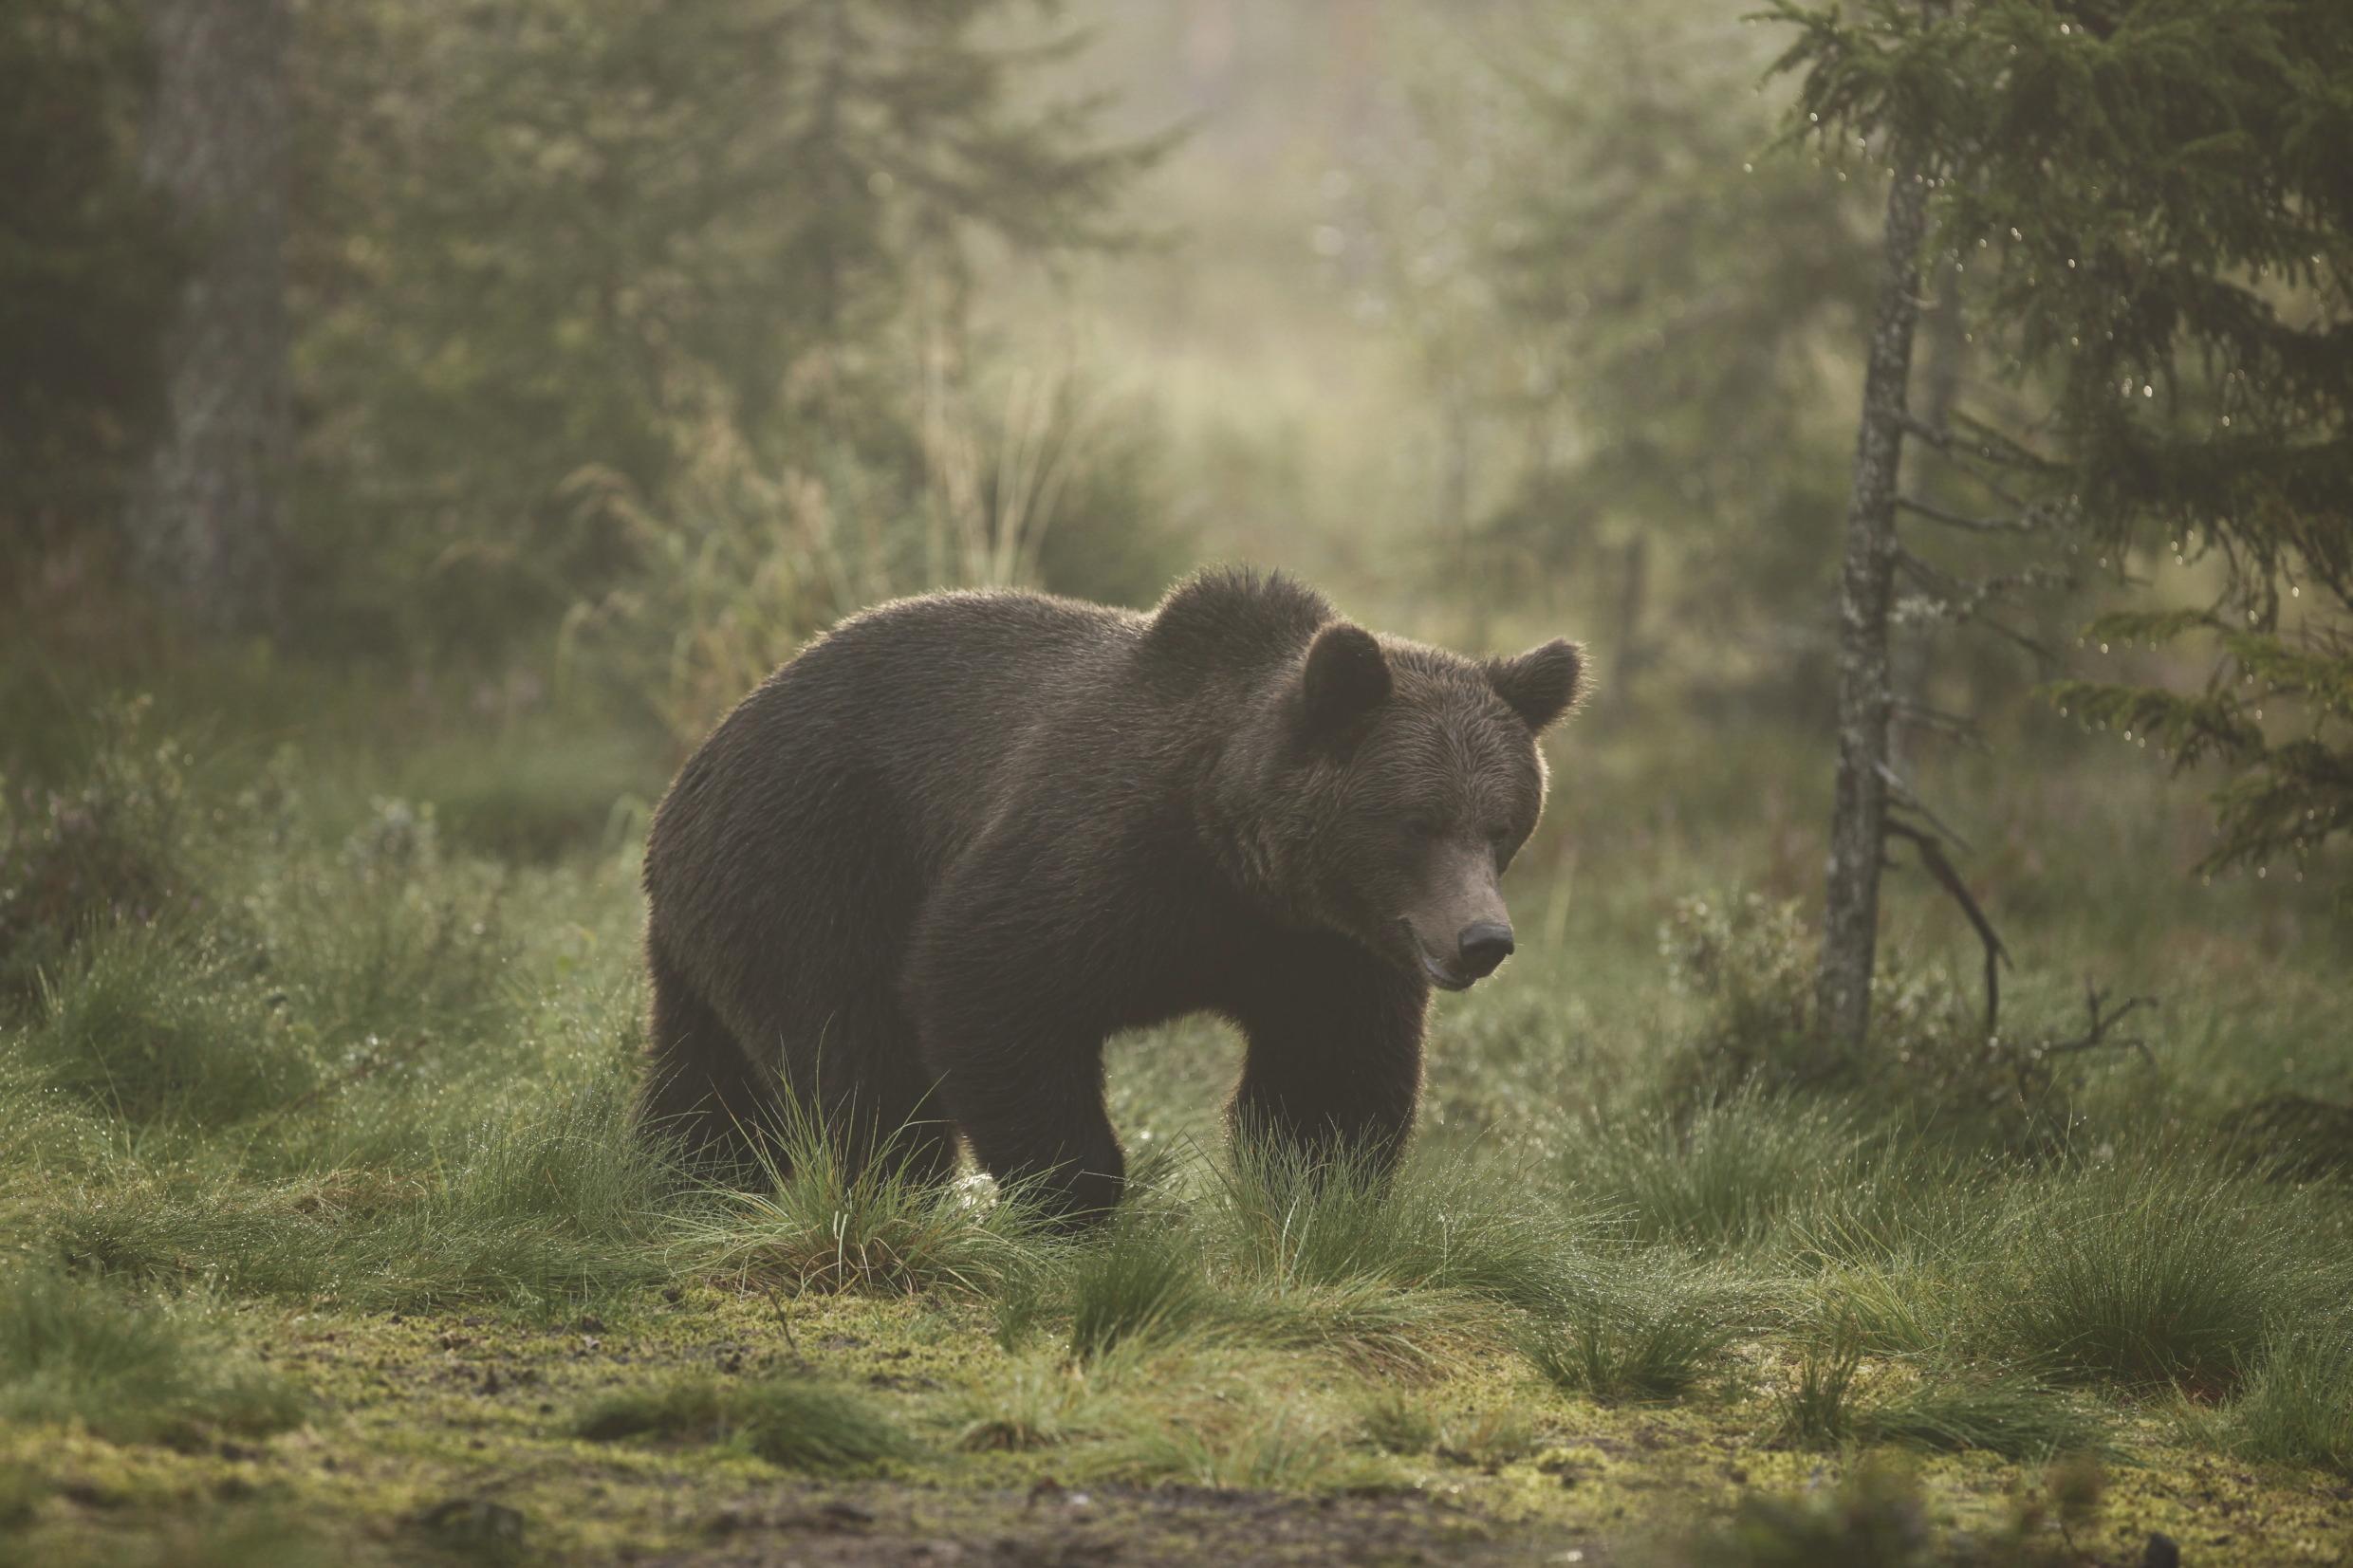 A brown bear is walking through a foggy forest.